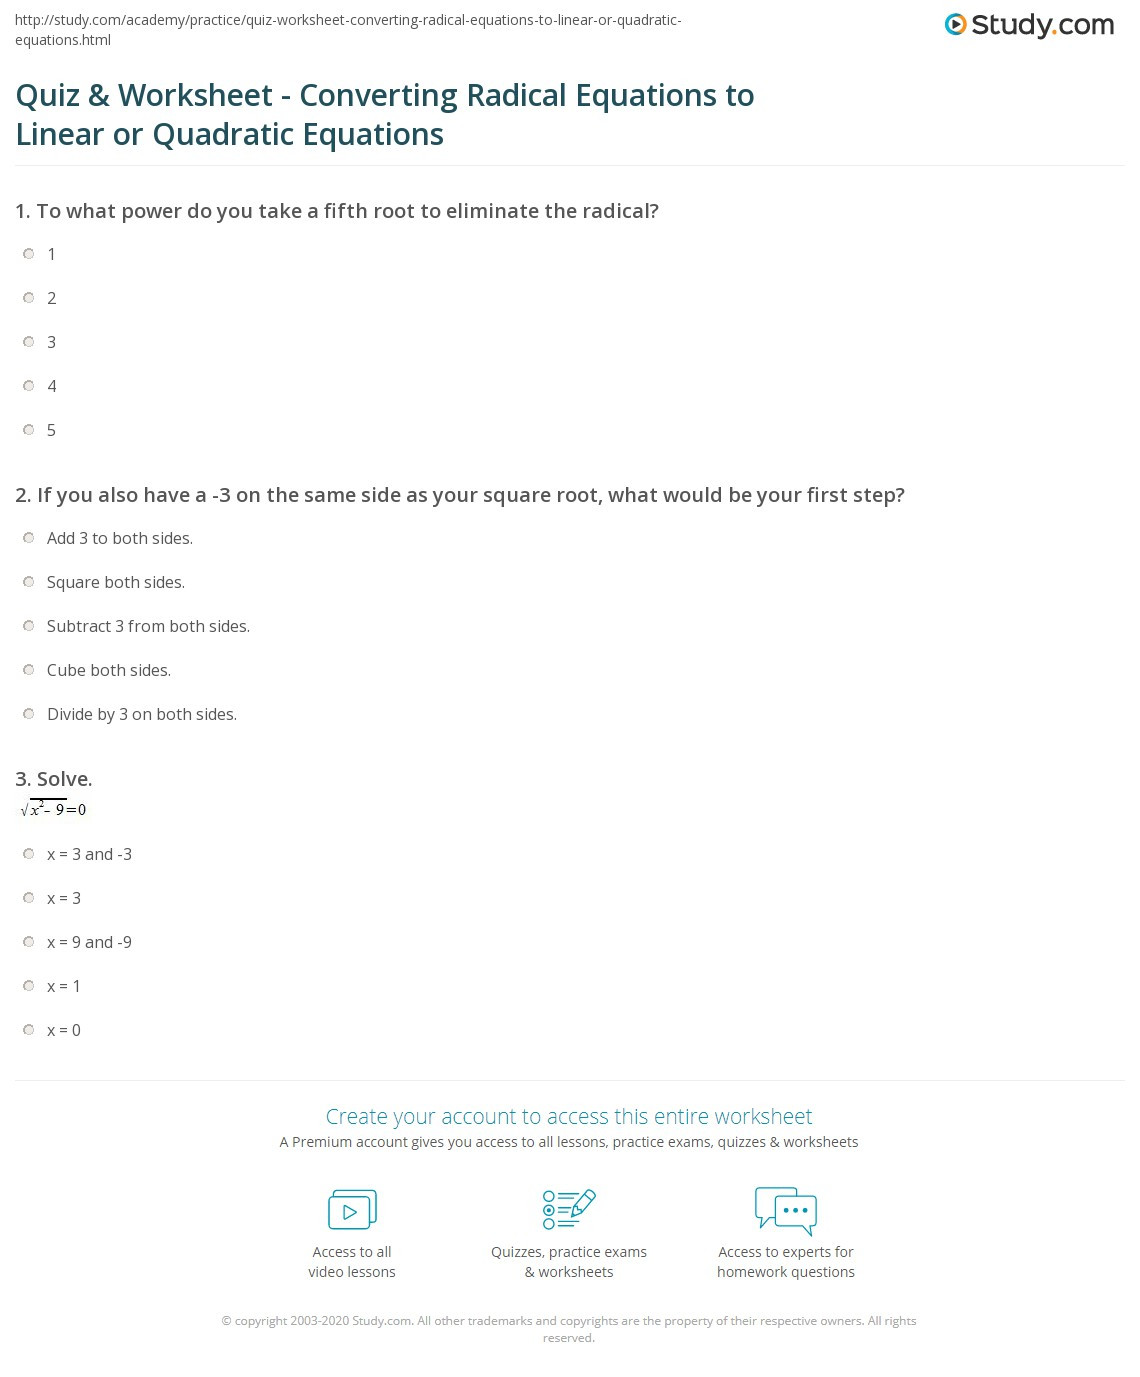 Solve Radical Equations Worksheet Quiz &amp; Worksheet Converting Radical Equations to Linear or